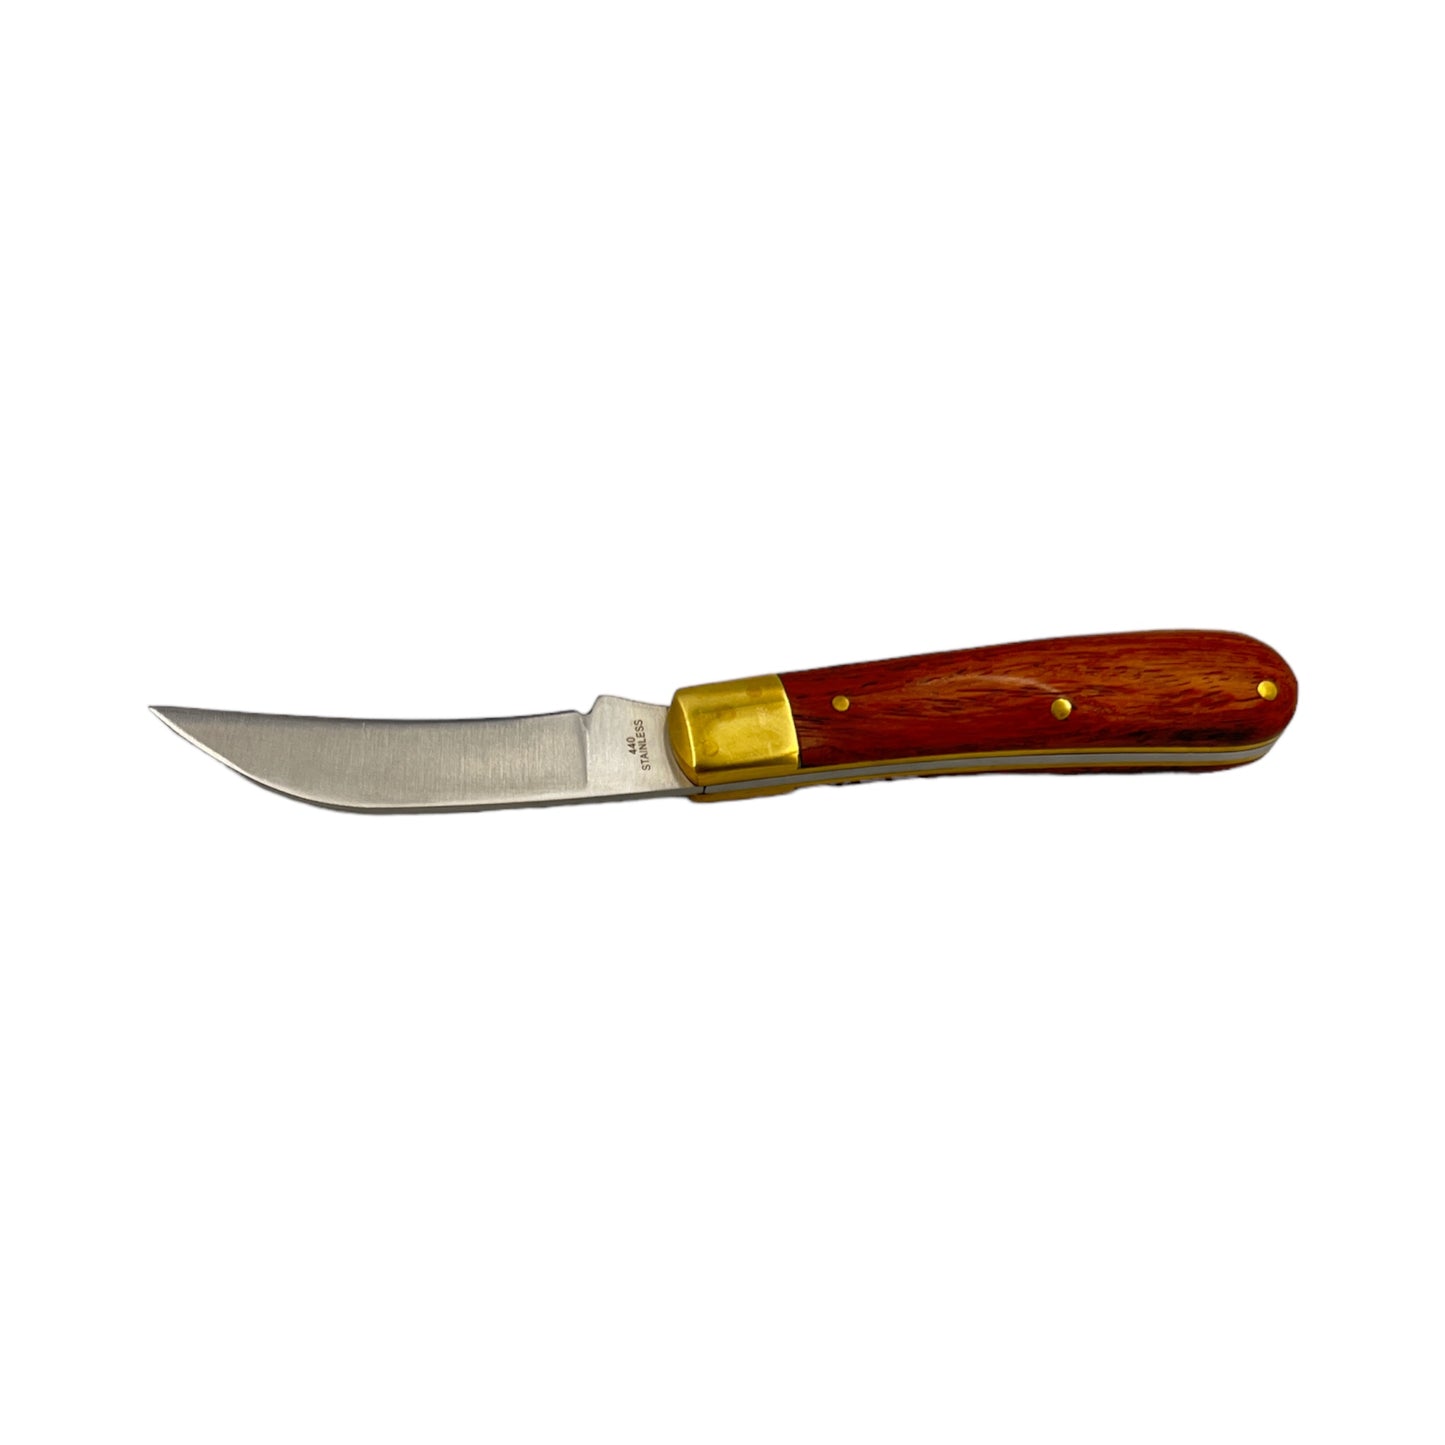 The Biltong Buddy Original Knife - 2.5 inch (6.5 cm) Blade